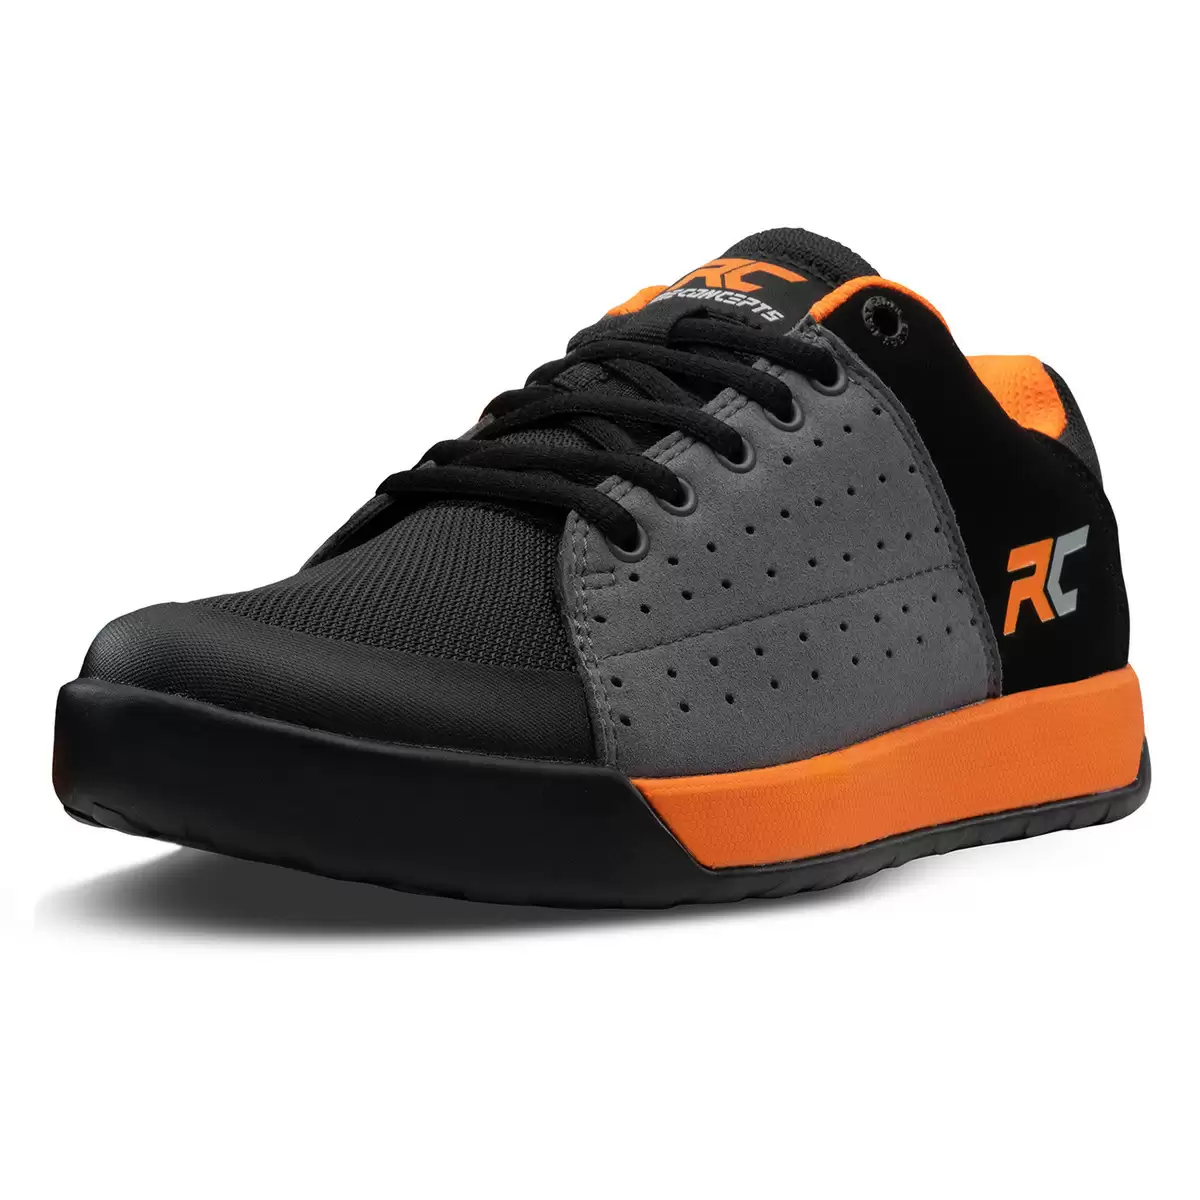 Orangefarbene Livewire Flat MTB-Schuhe, Größe 46 - image